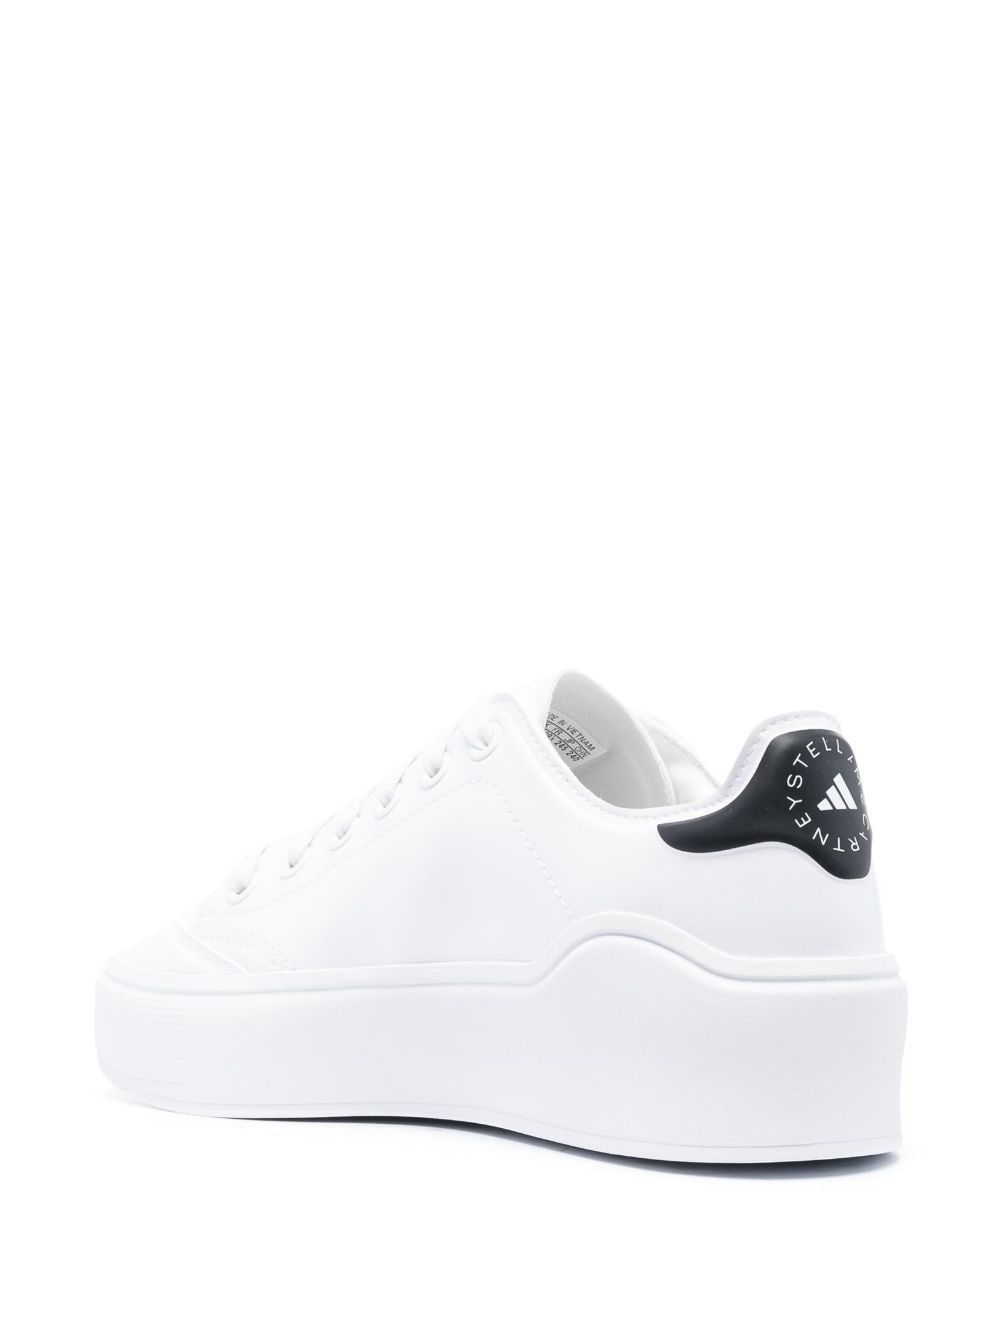 Adidas By Stella Mccartney Adidas By Stella McCartney Sneakers White